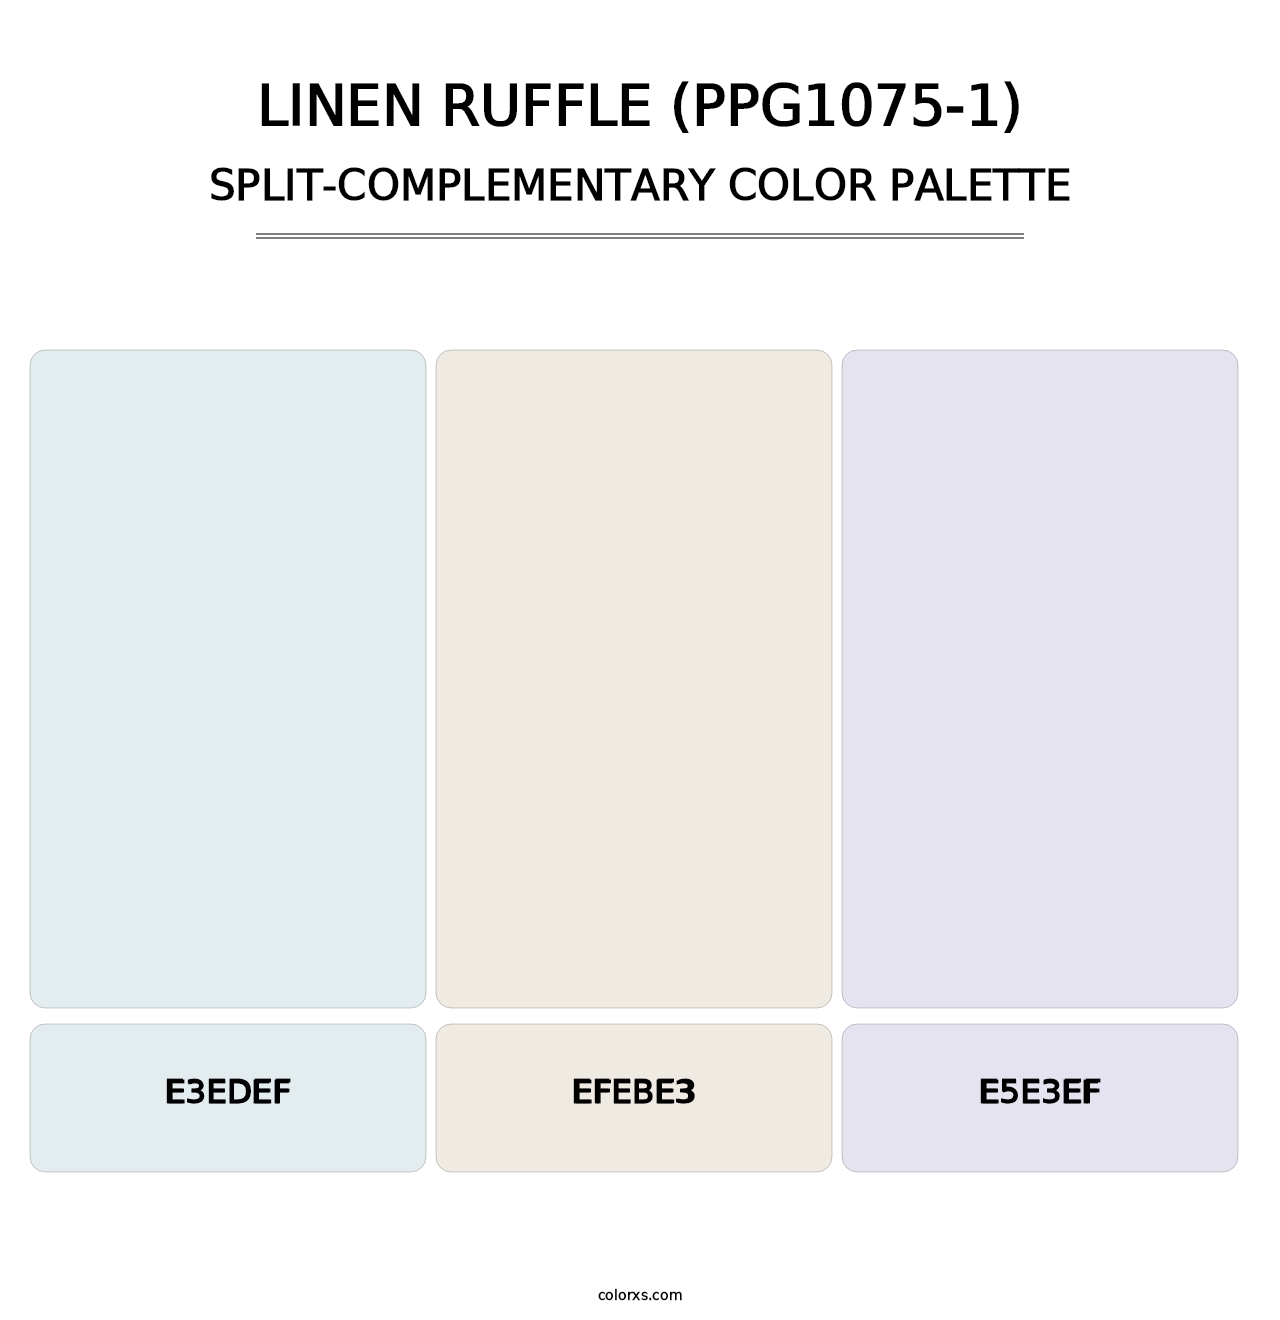 Linen Ruffle (PPG1075-1) - Split-Complementary Color Palette